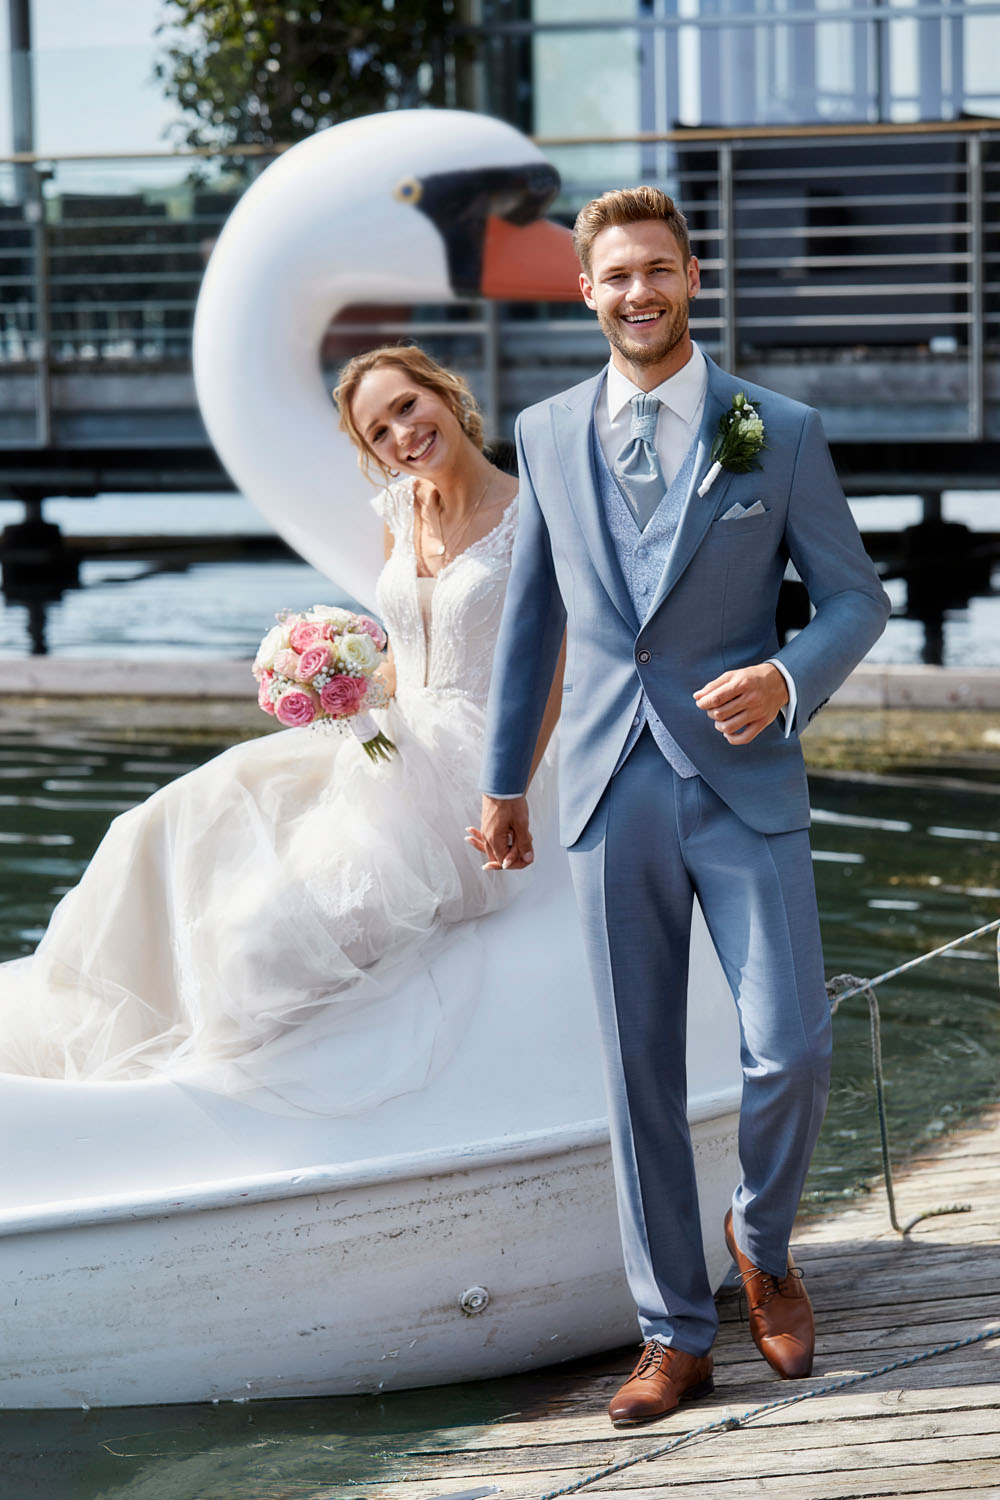 Elegant White Wedding Suit - Tom Murphy's Formal and Menswear